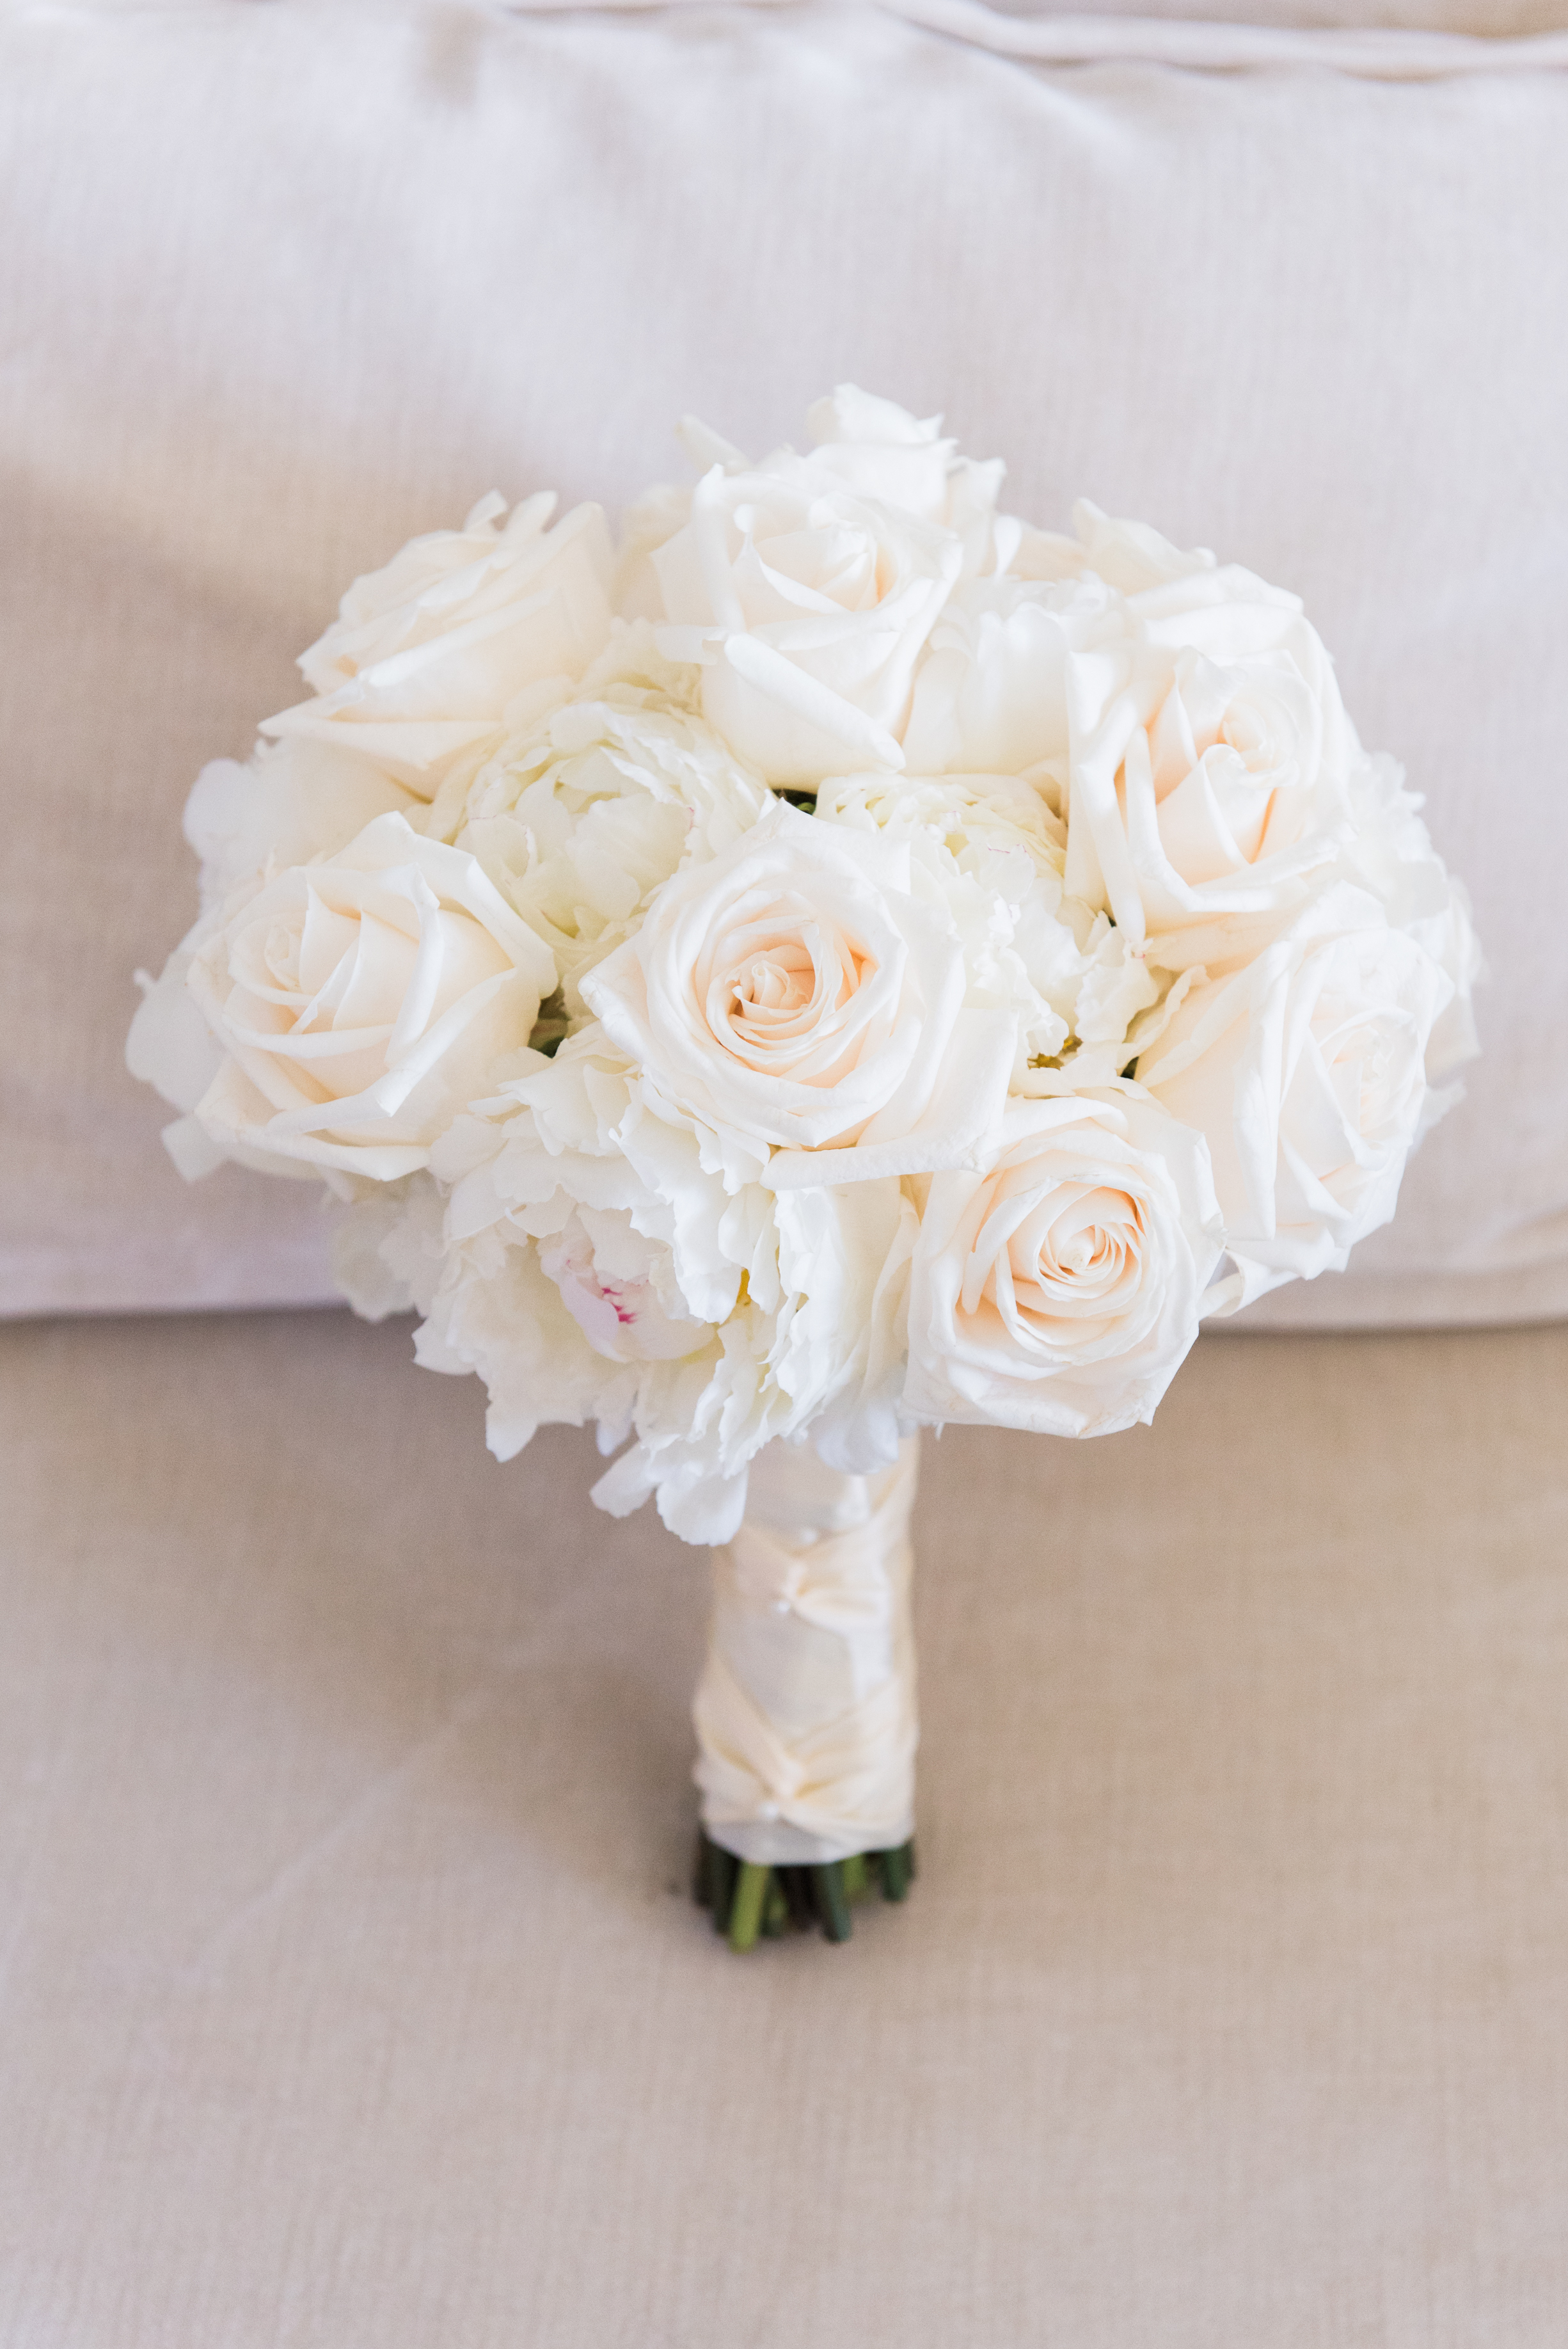 All White Wedding Bouquet - Flagler Museum Palm Beach Wedding Venue - The Overwhelmed Bride Wedding Blog